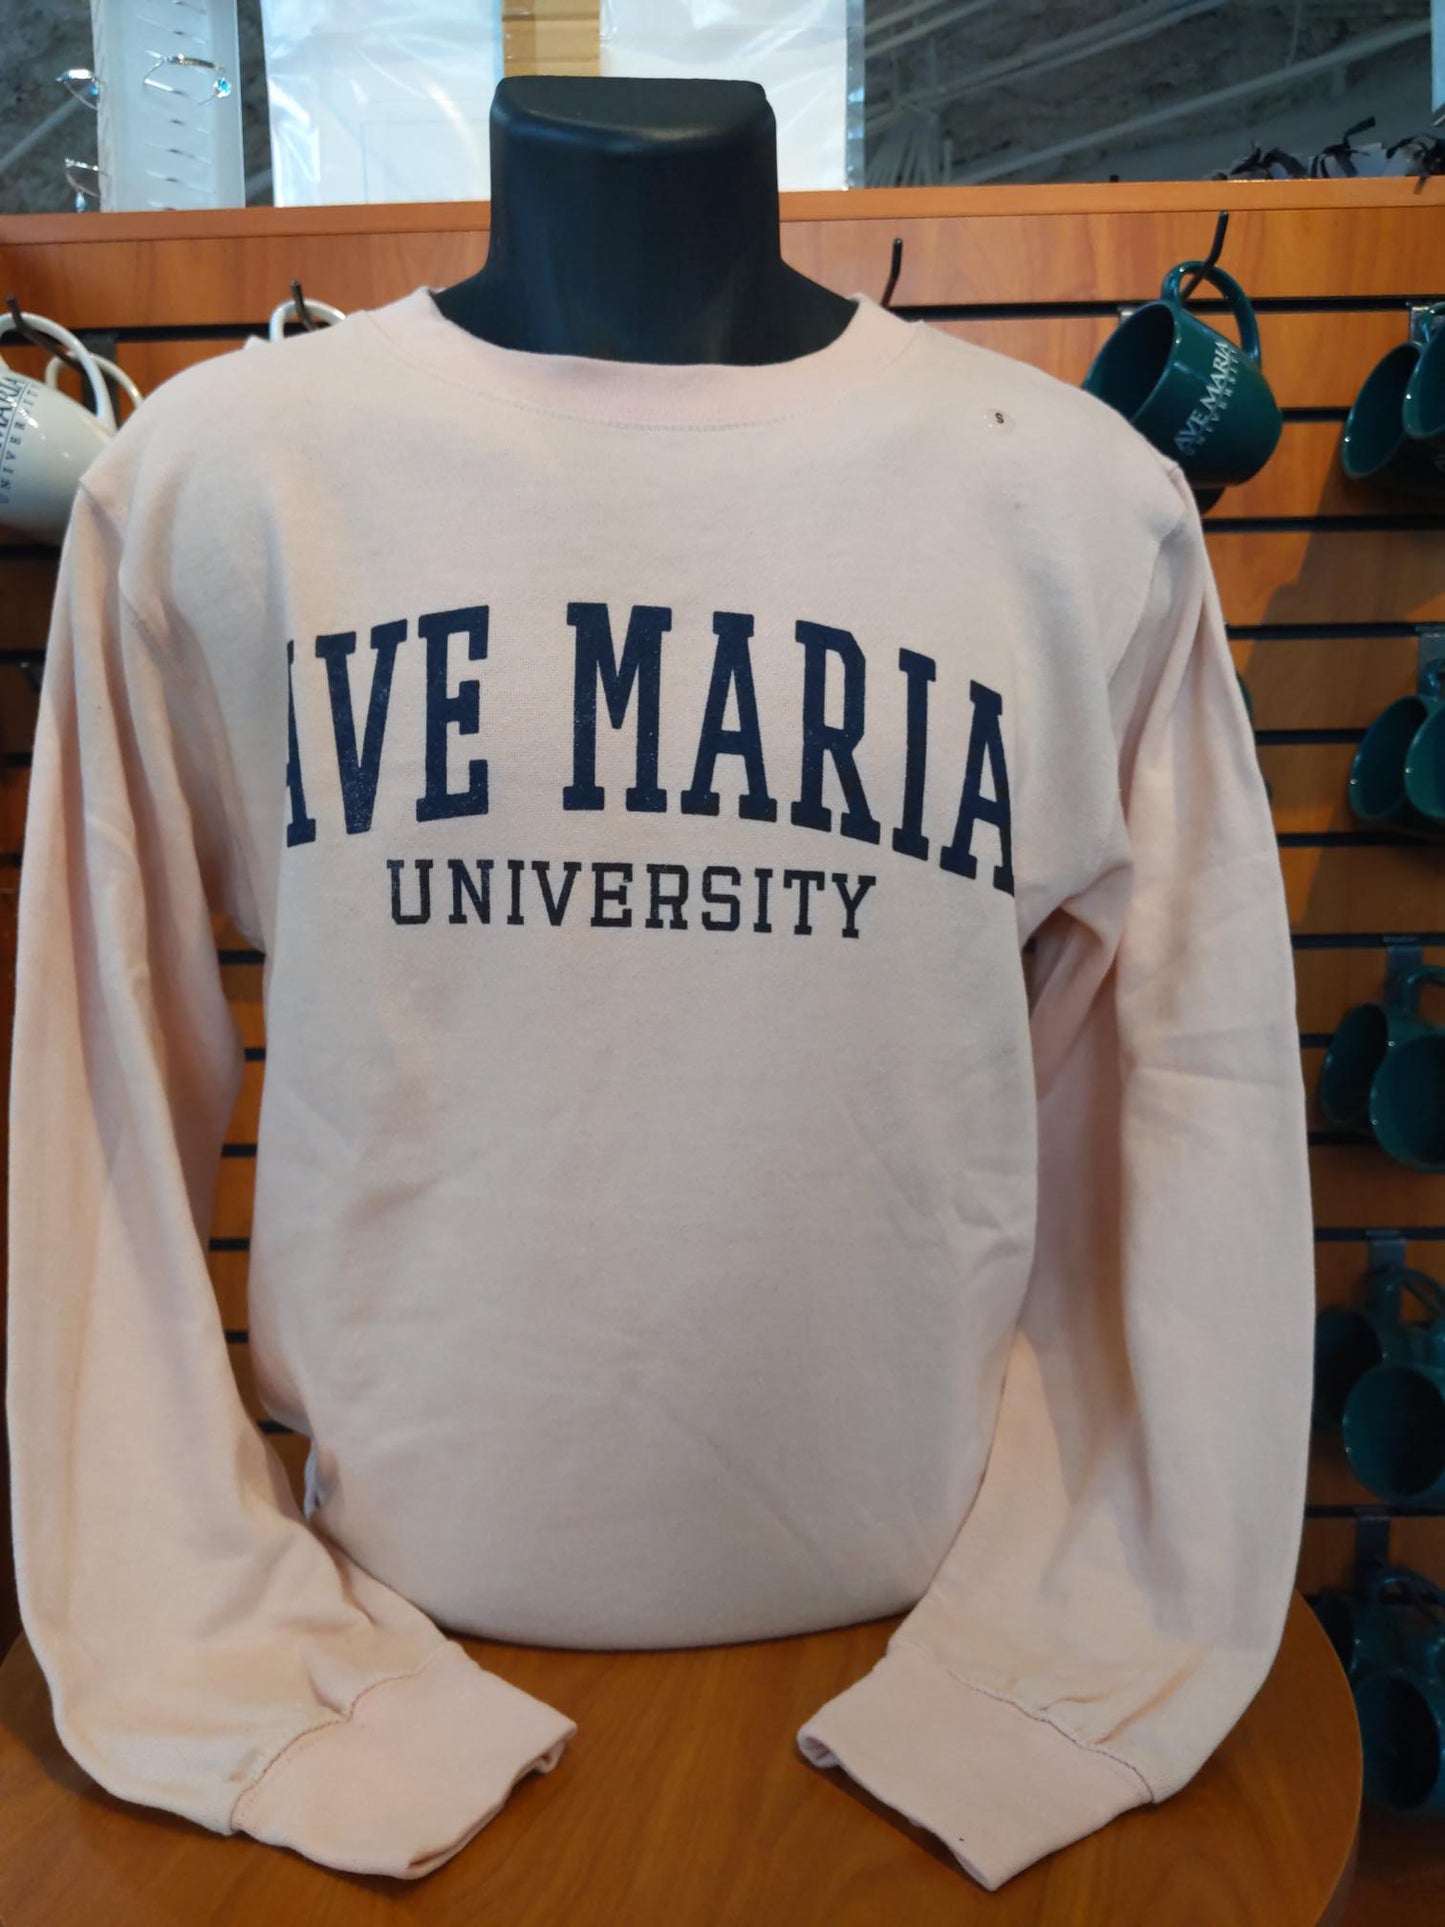 Ave Maria University Fundamental Crewneck